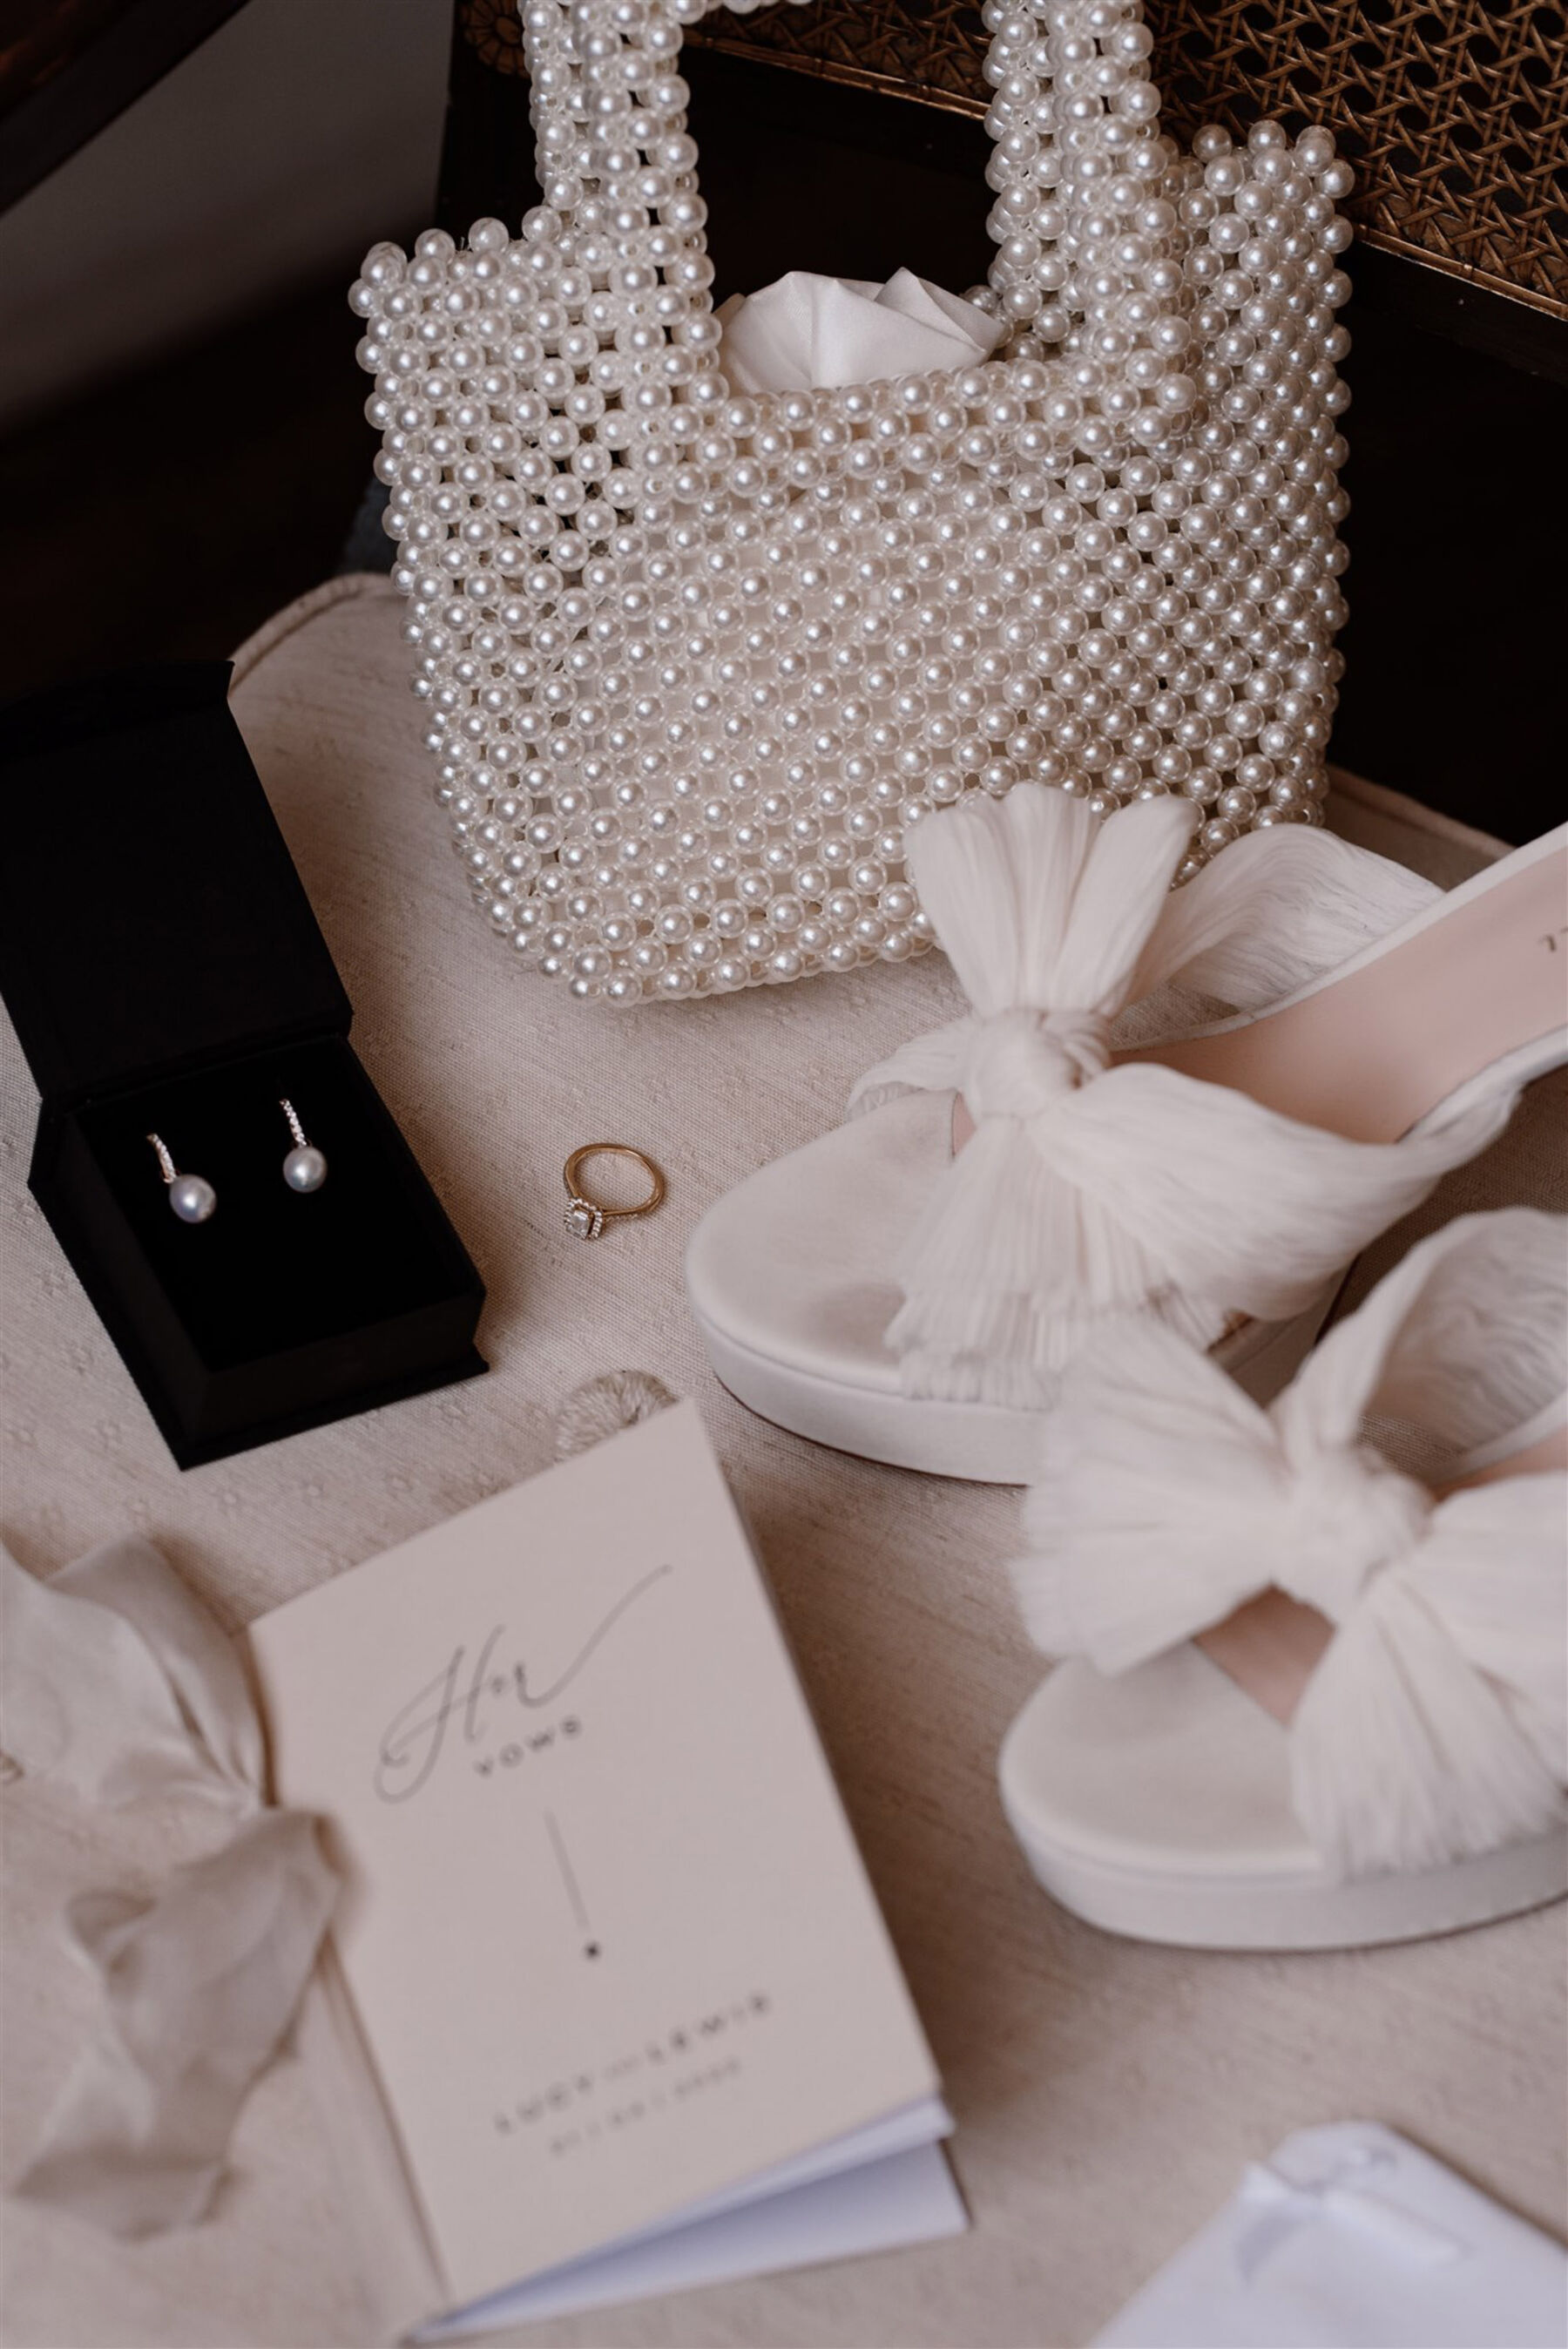 Loeffler Randall wedding shoes & pearl beaded bridal handbag